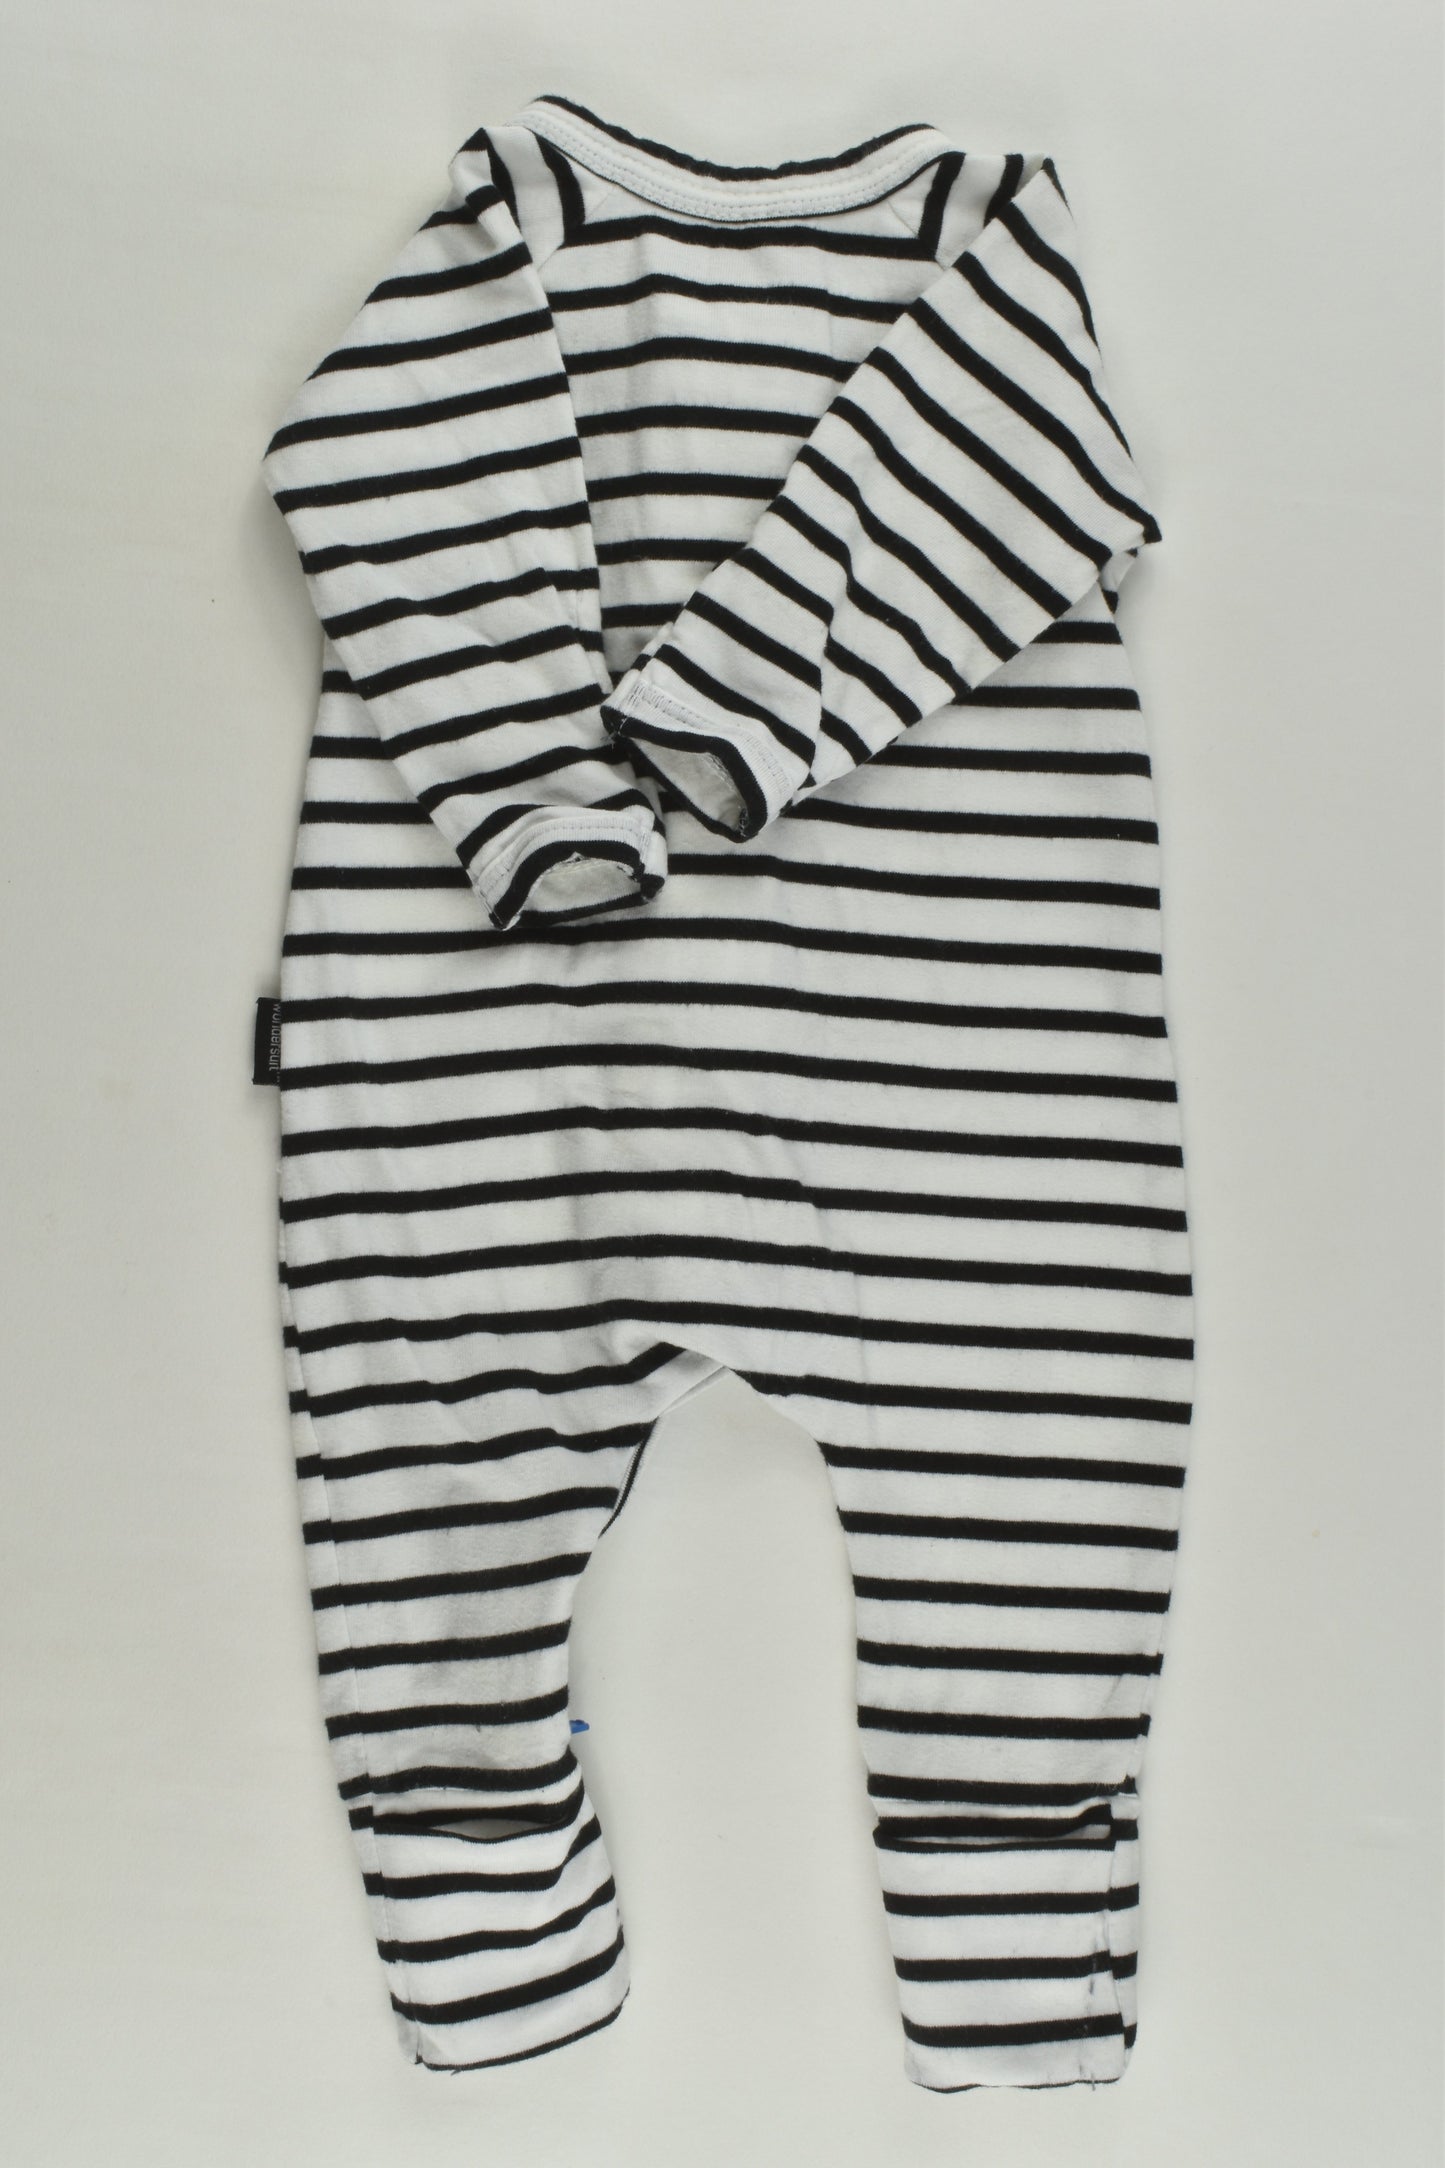 Bonds Size 0000 (Newborn) Striped Wondersuit